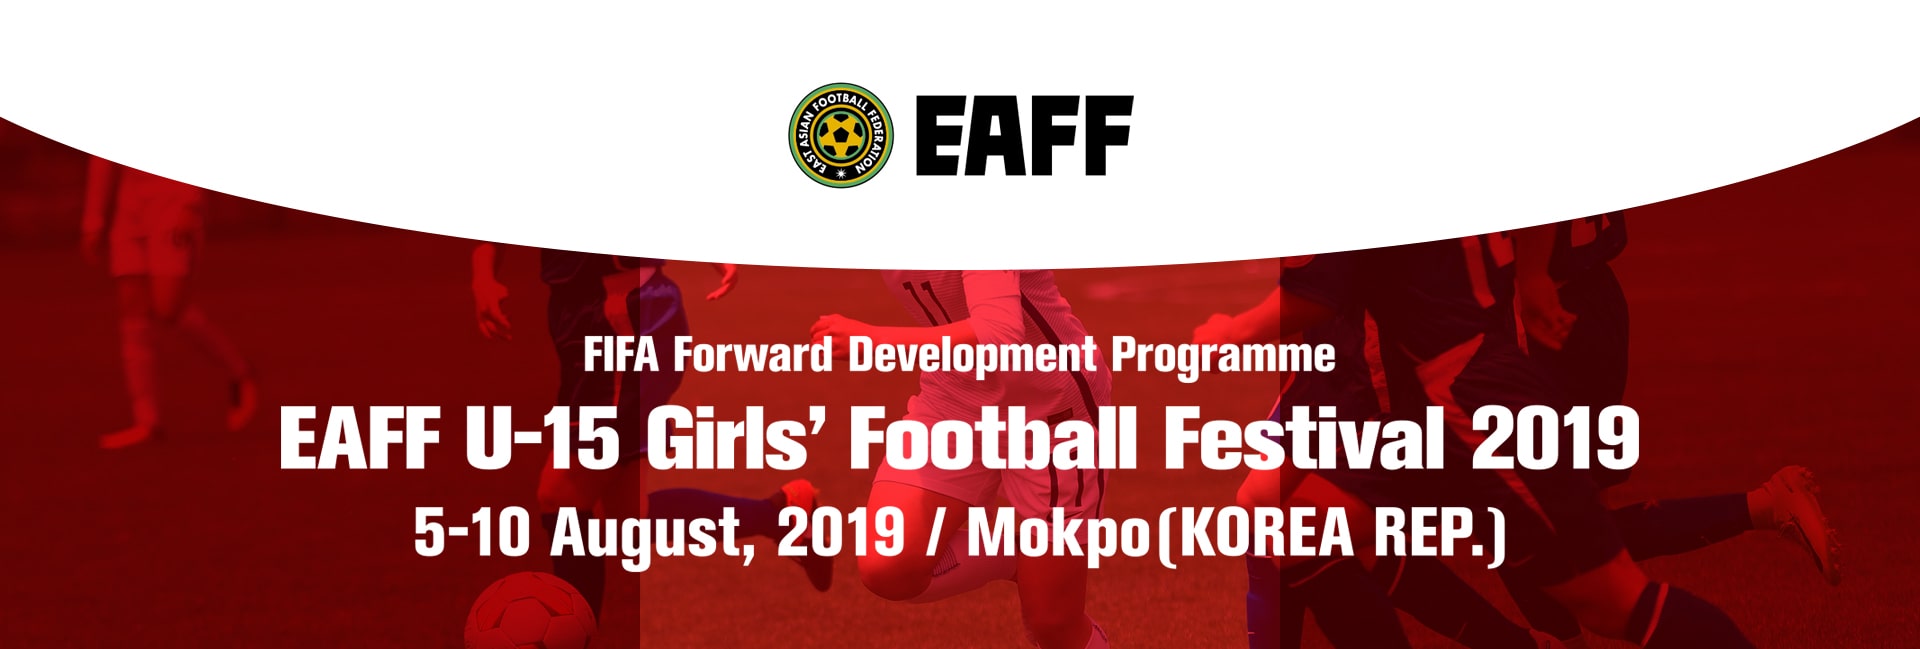 FIFA Forward Development Programme EAFF U15 Girls’ Football Festival 2019